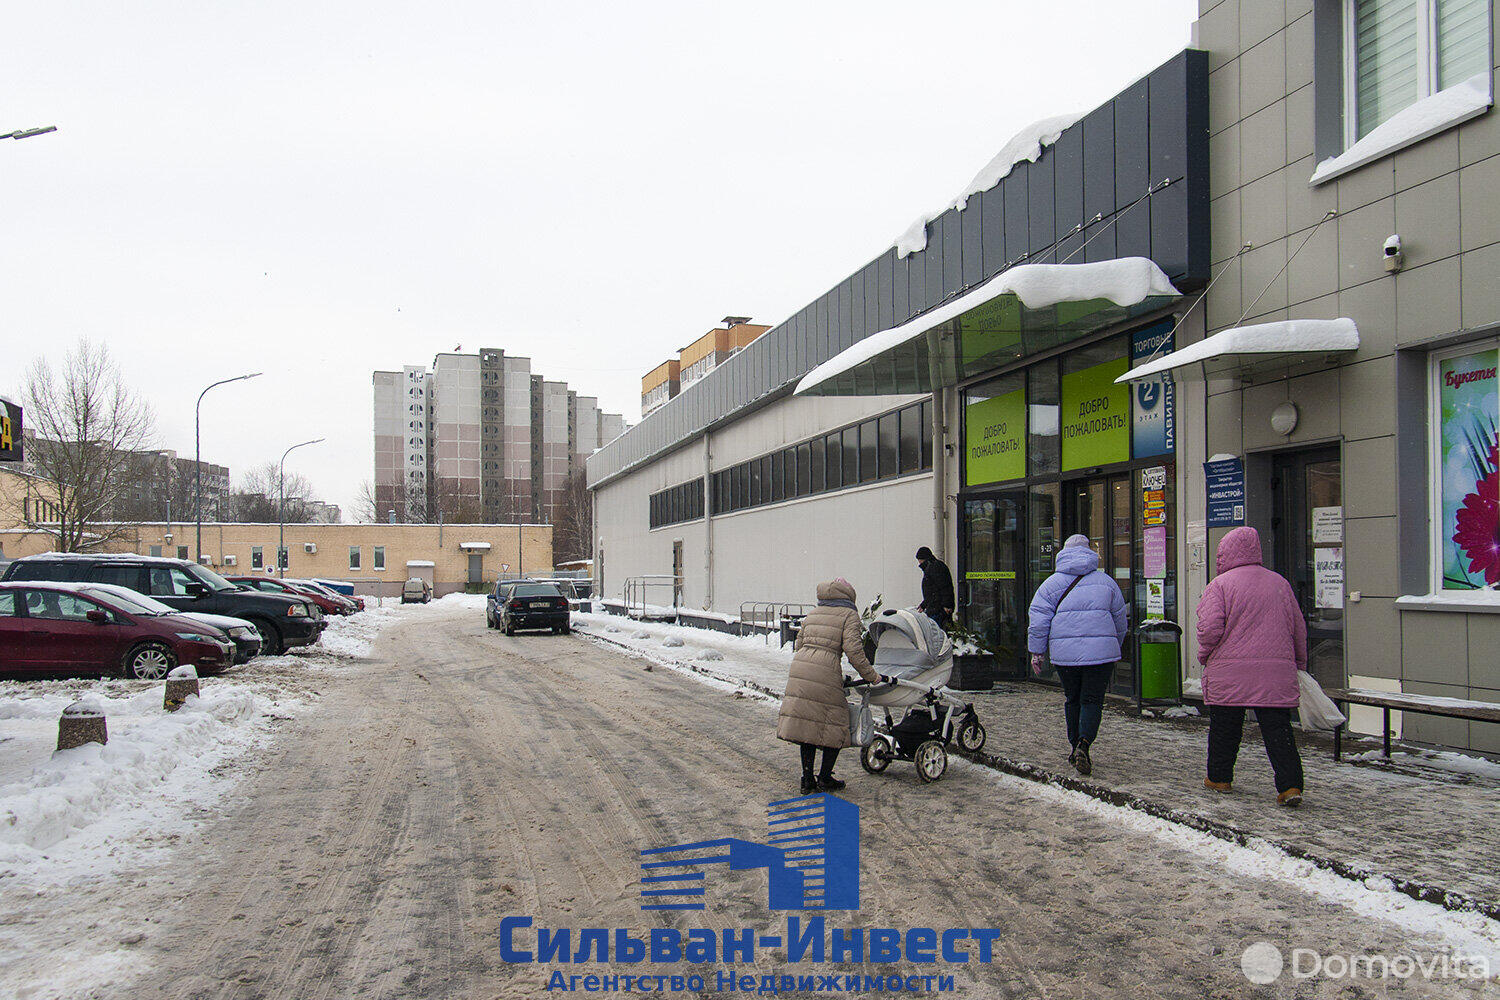 Аренда торгового помещения на ул. Асаналиева, д. 44 в Минске, 5100BYN, код 964478 - фото 2